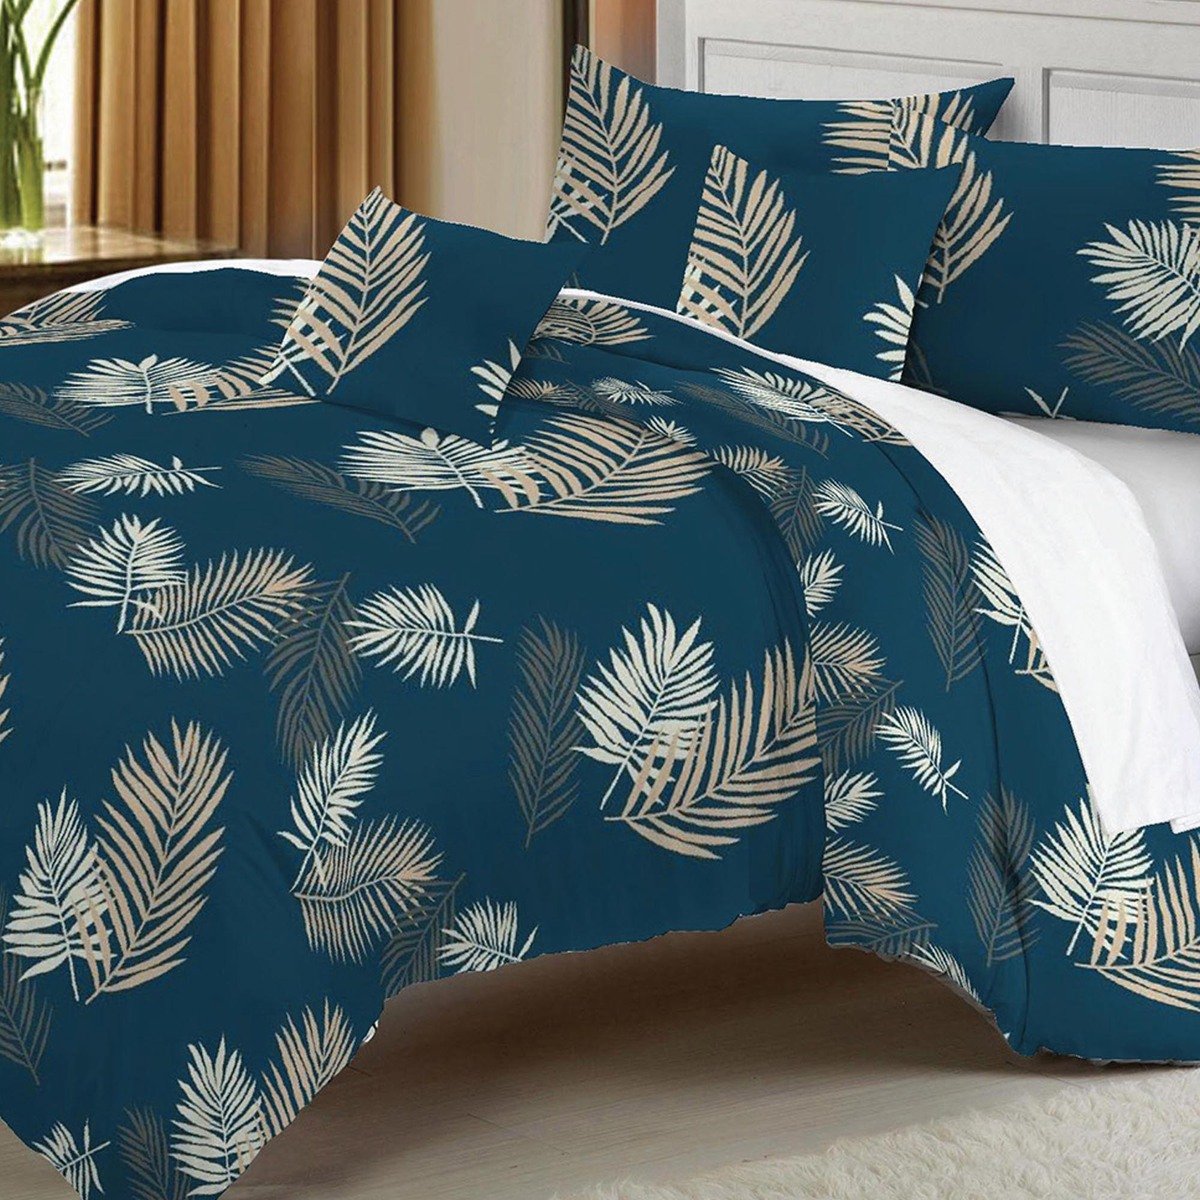 Homewell Comforter King 6pcs Set Assorted